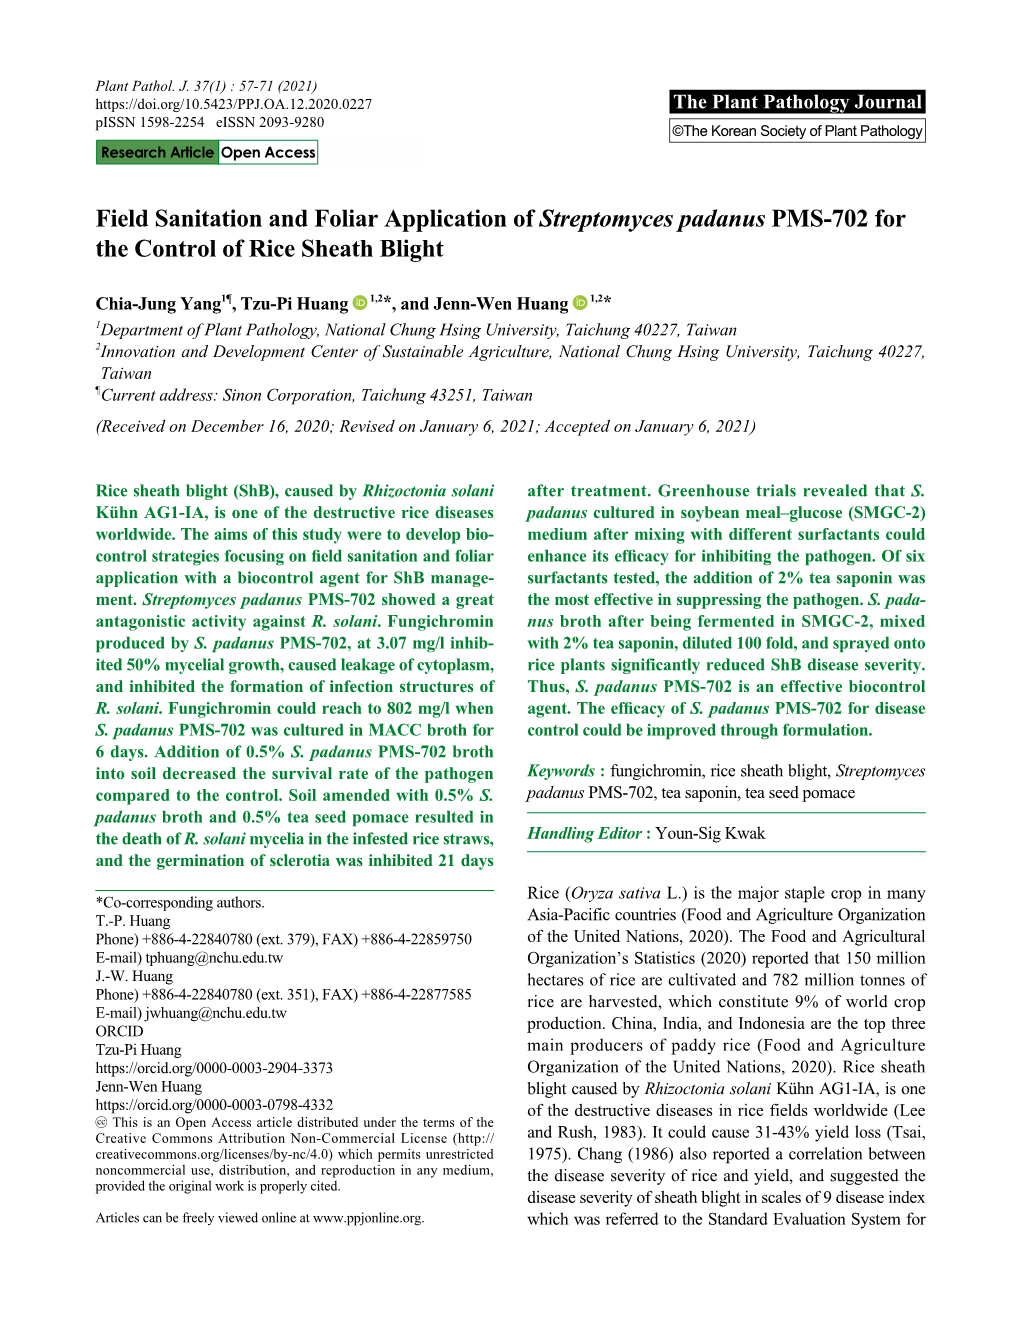 Field Sanitation and Foliar Application of Streptomyces Padanus PMS-702 for the Control of Rice Sheath Blight